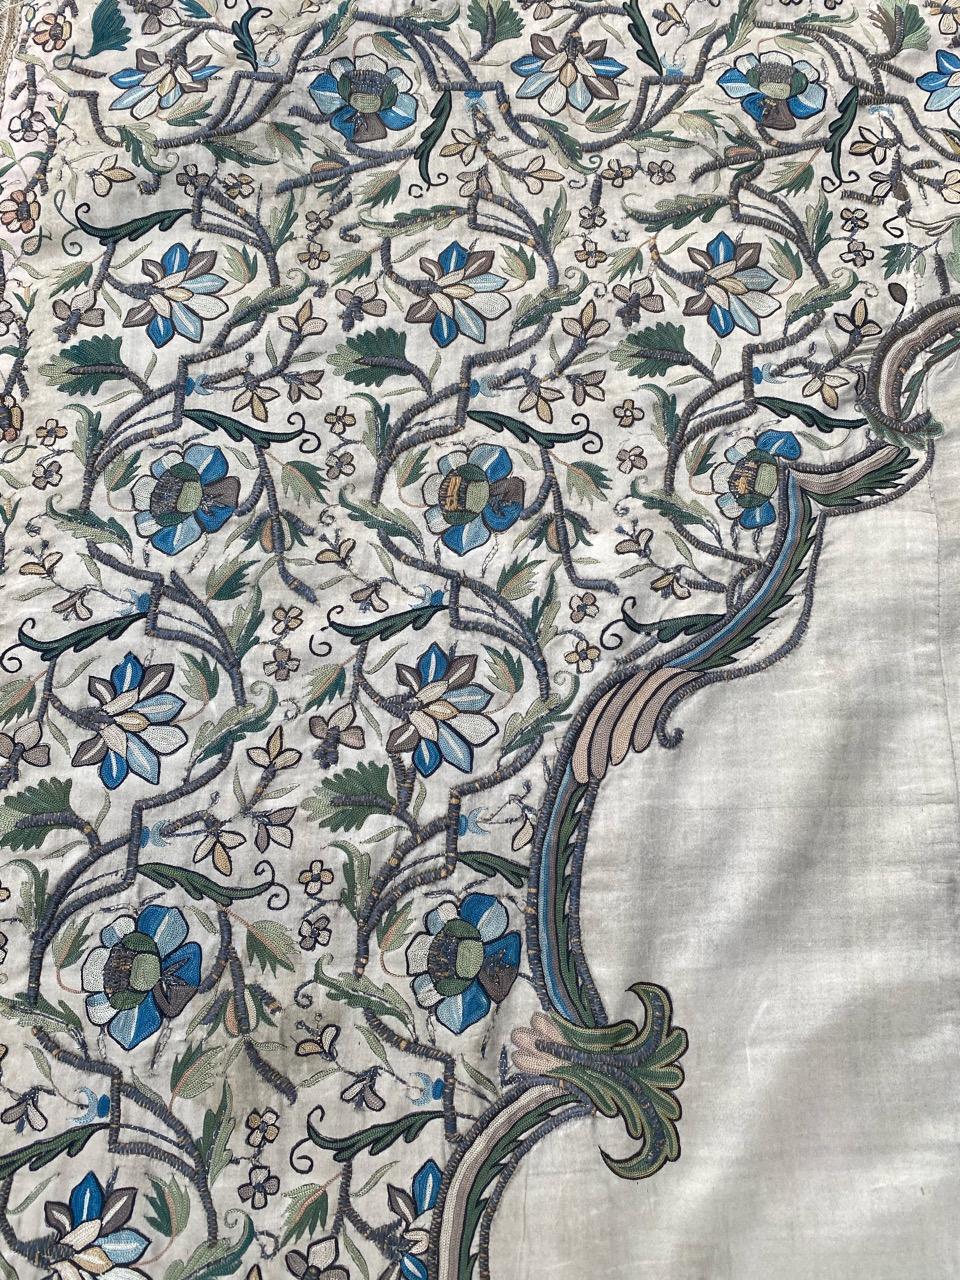 Wonderful Antique Turkish Ottoman Embroidery 1